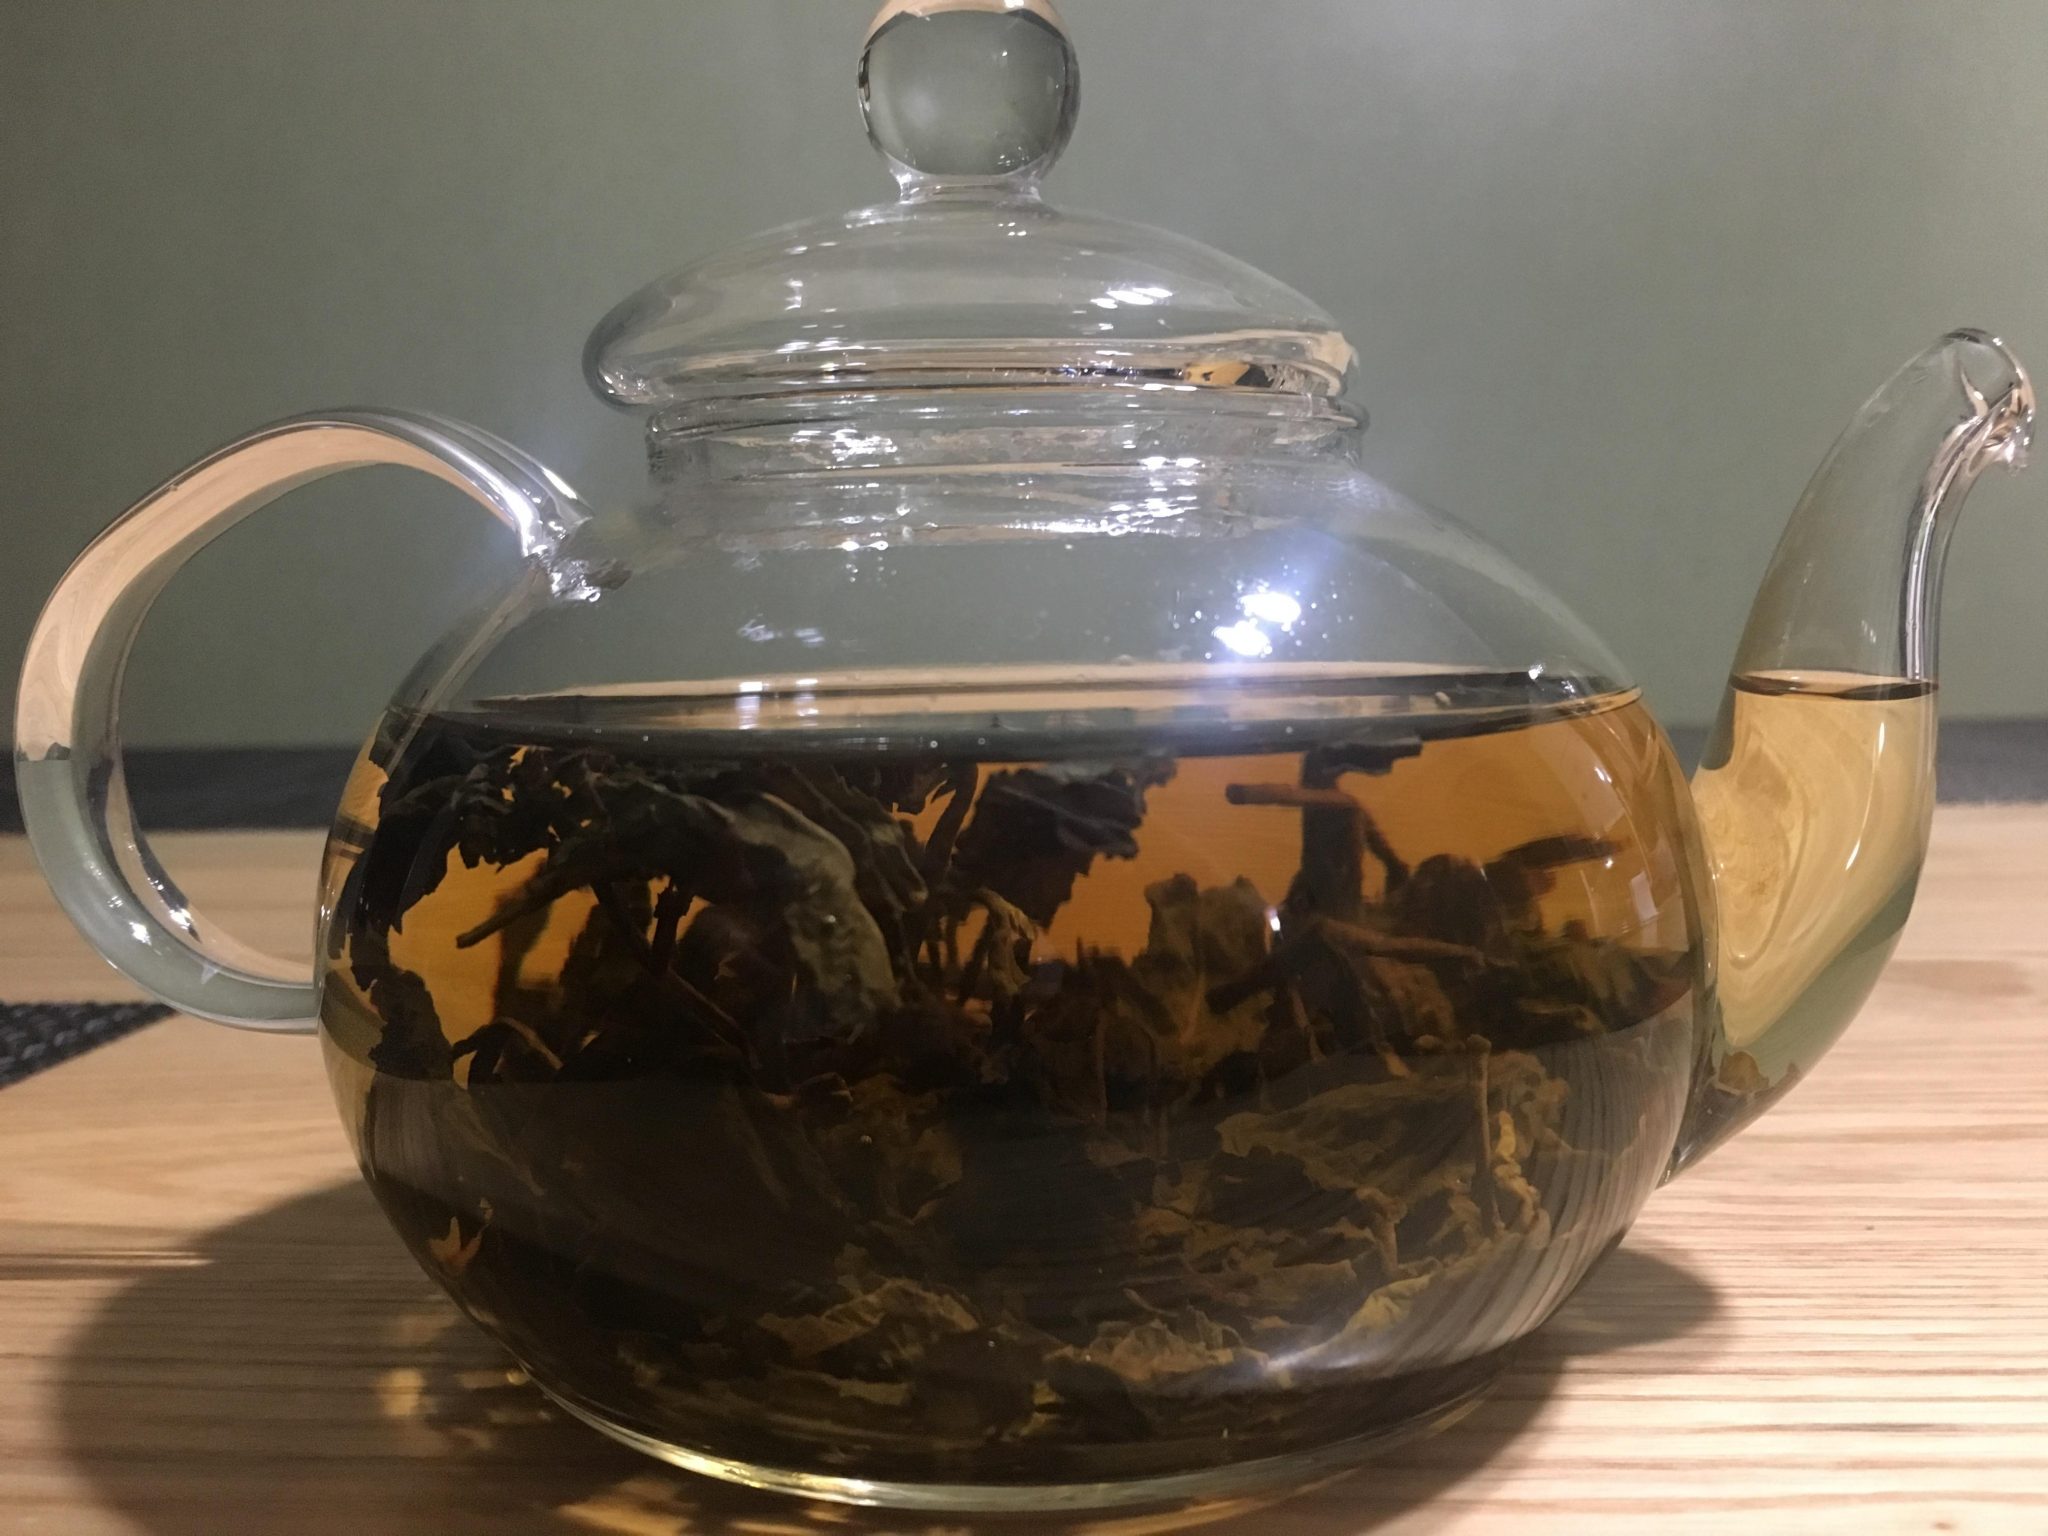 Uncle Lee's Oolong Tea